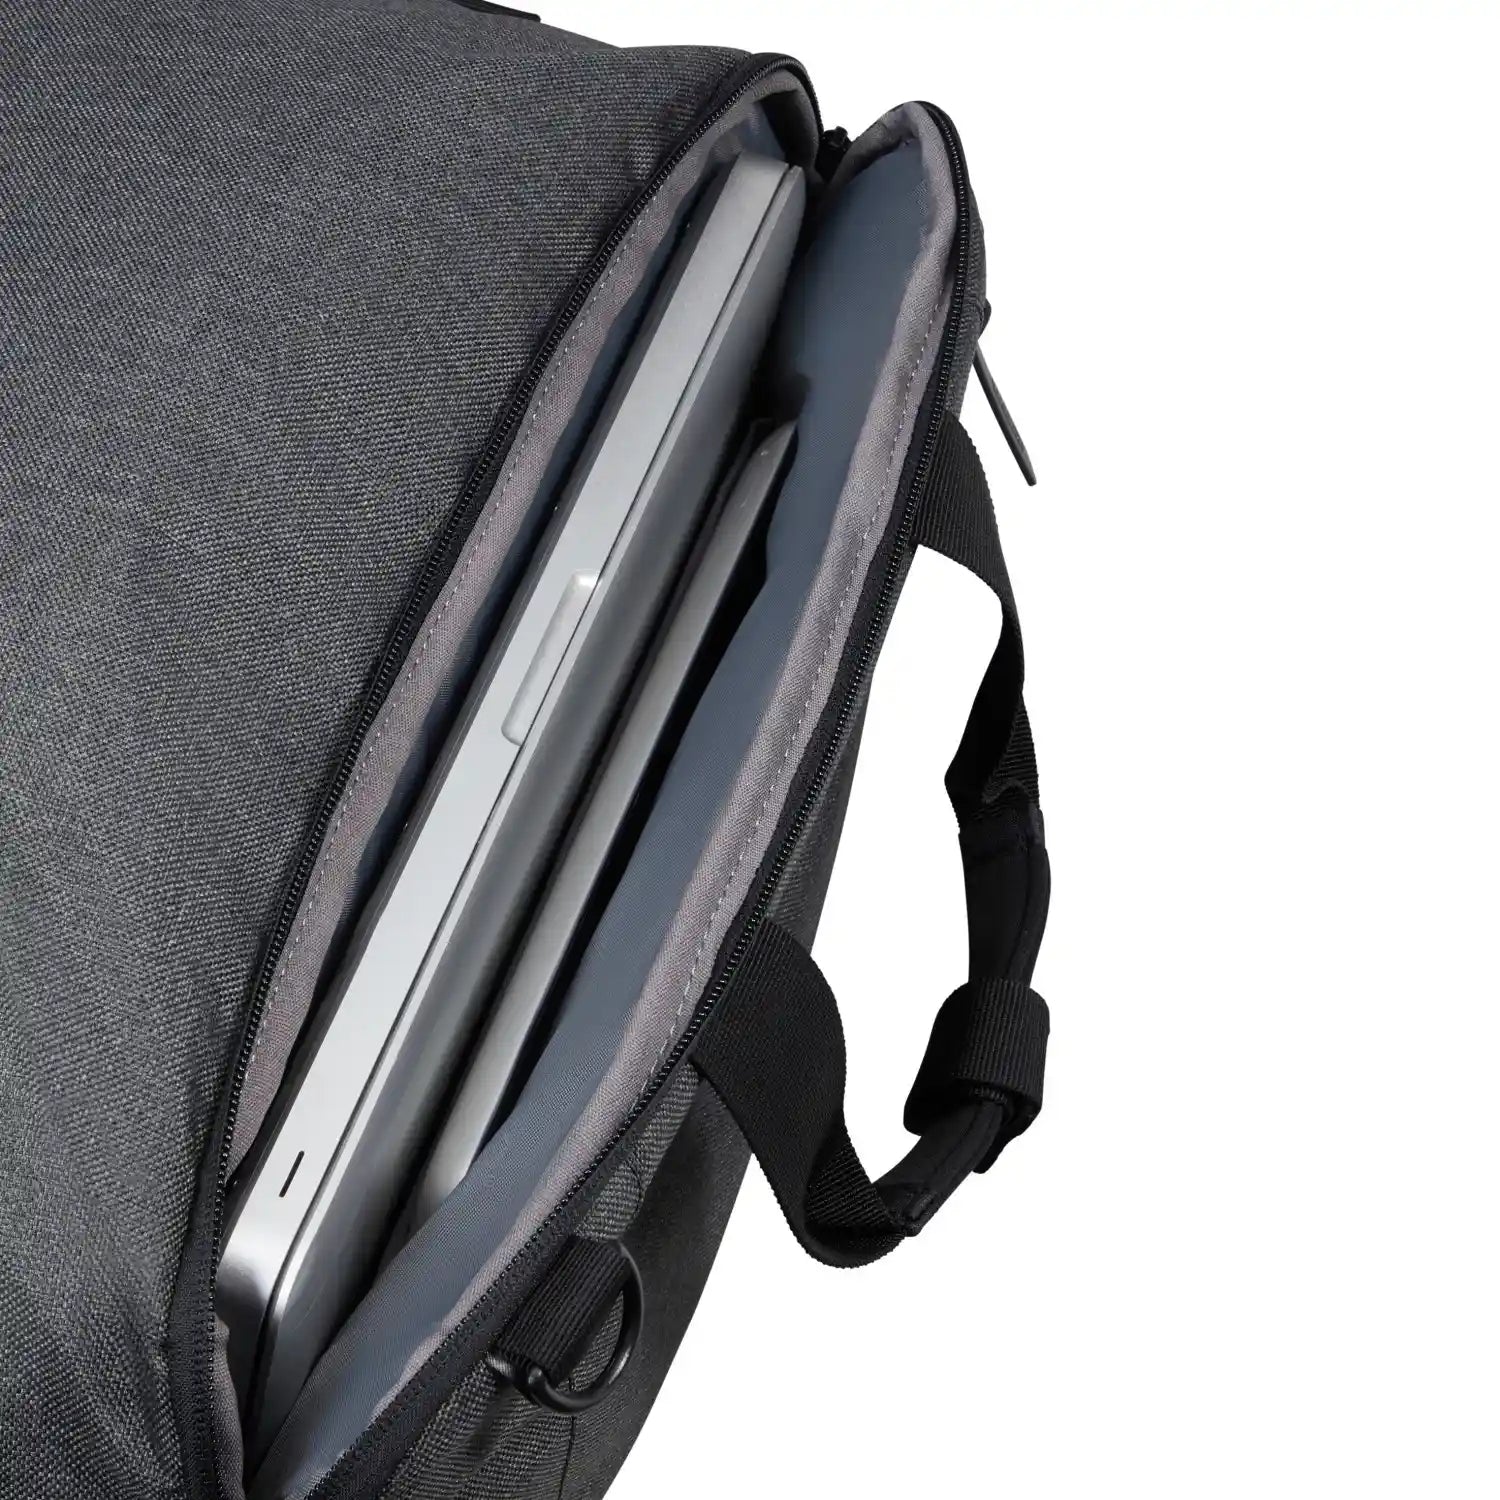 American Tourister Streethero 3-Way Boarding Bag 39 cm - Grey Melange